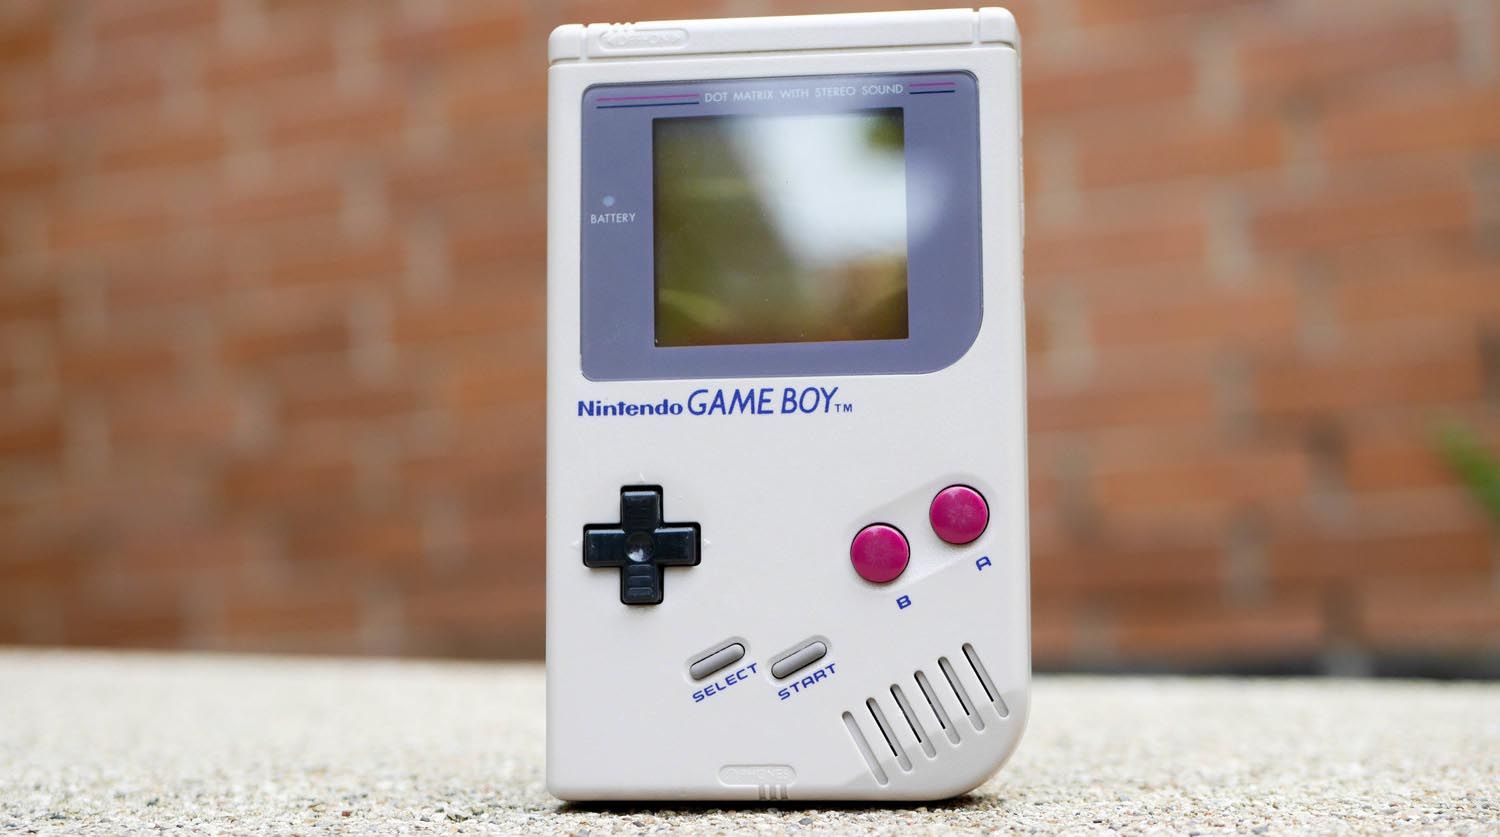 Game Boy DMG